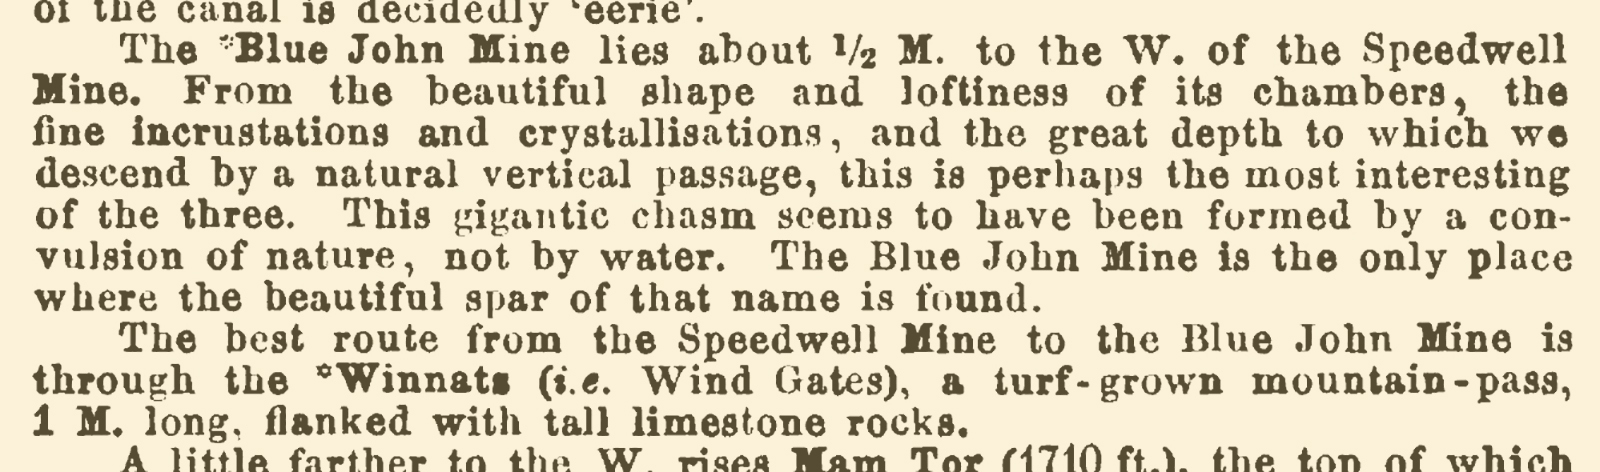 excerpt from antique tour guidebook describing the Blue John mine